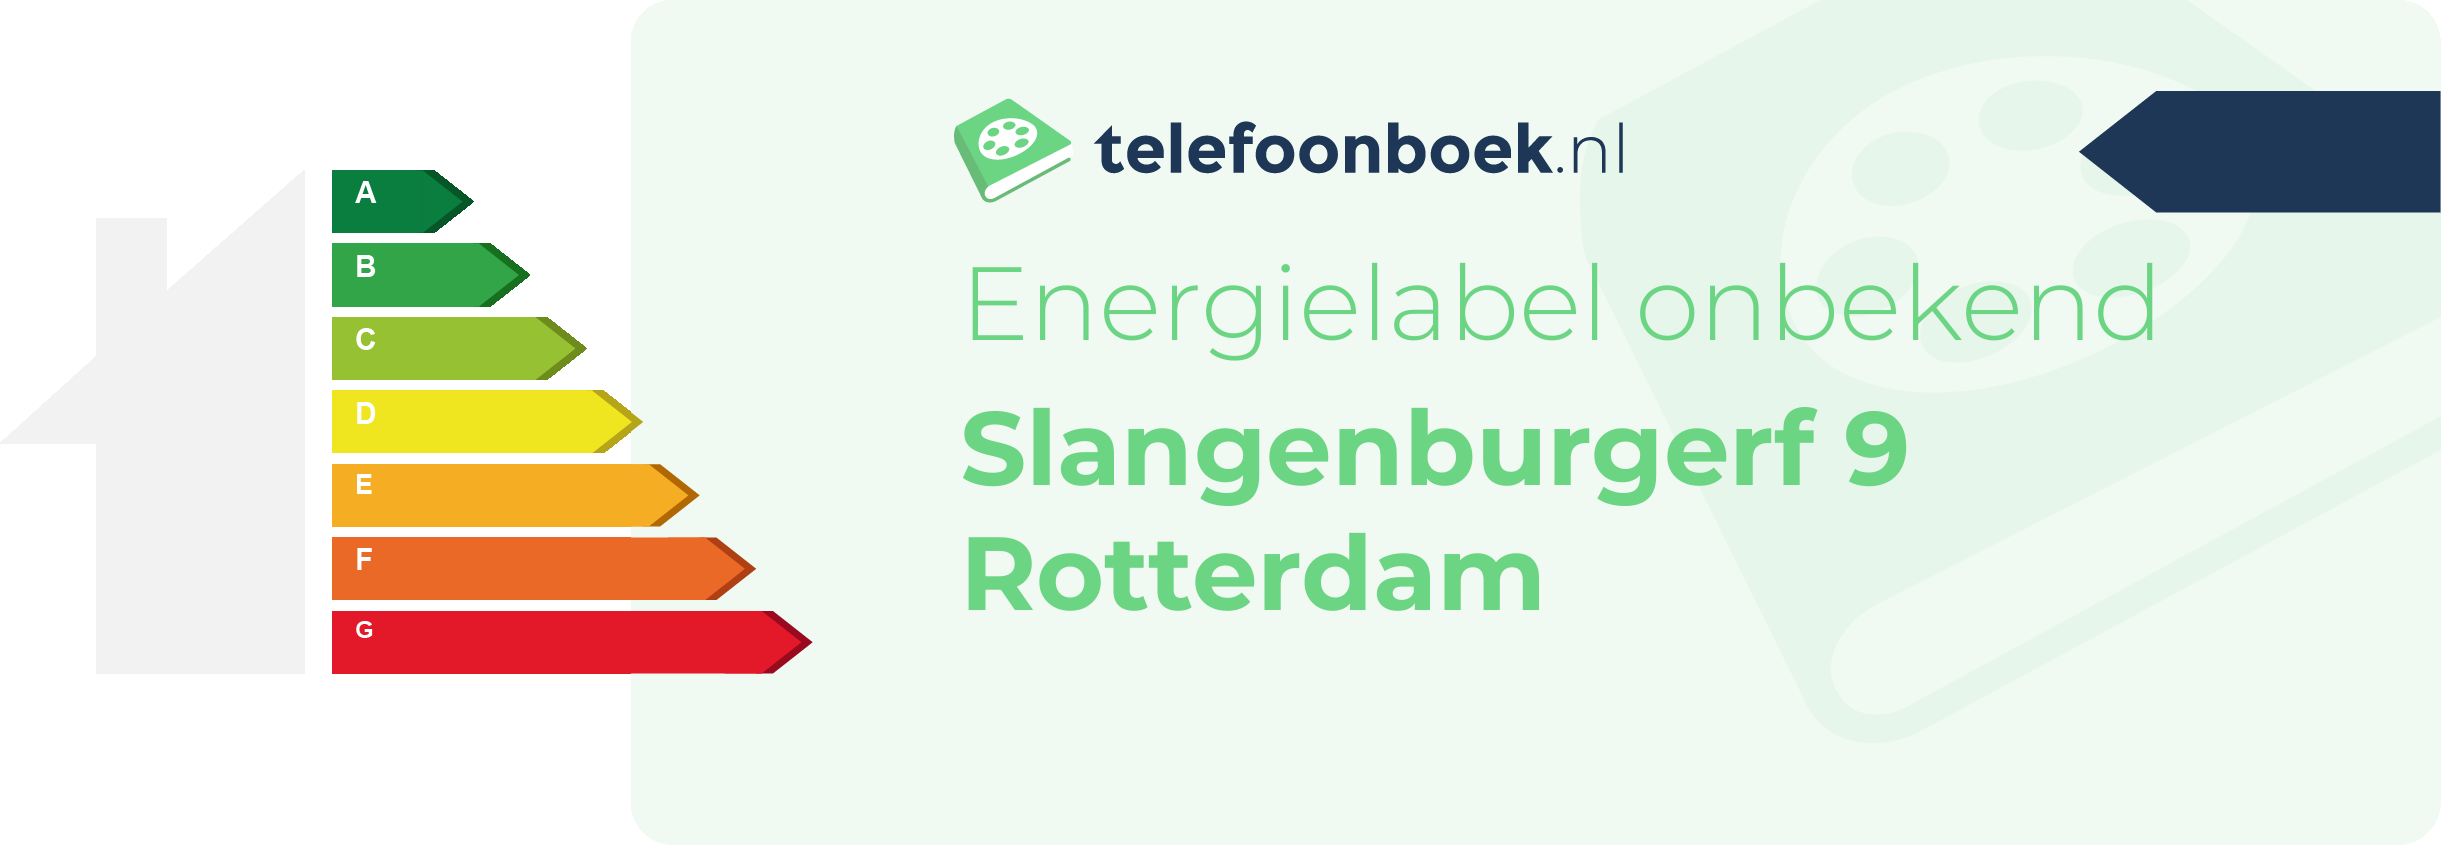 Energielabel Slangenburgerf 9 Rotterdam